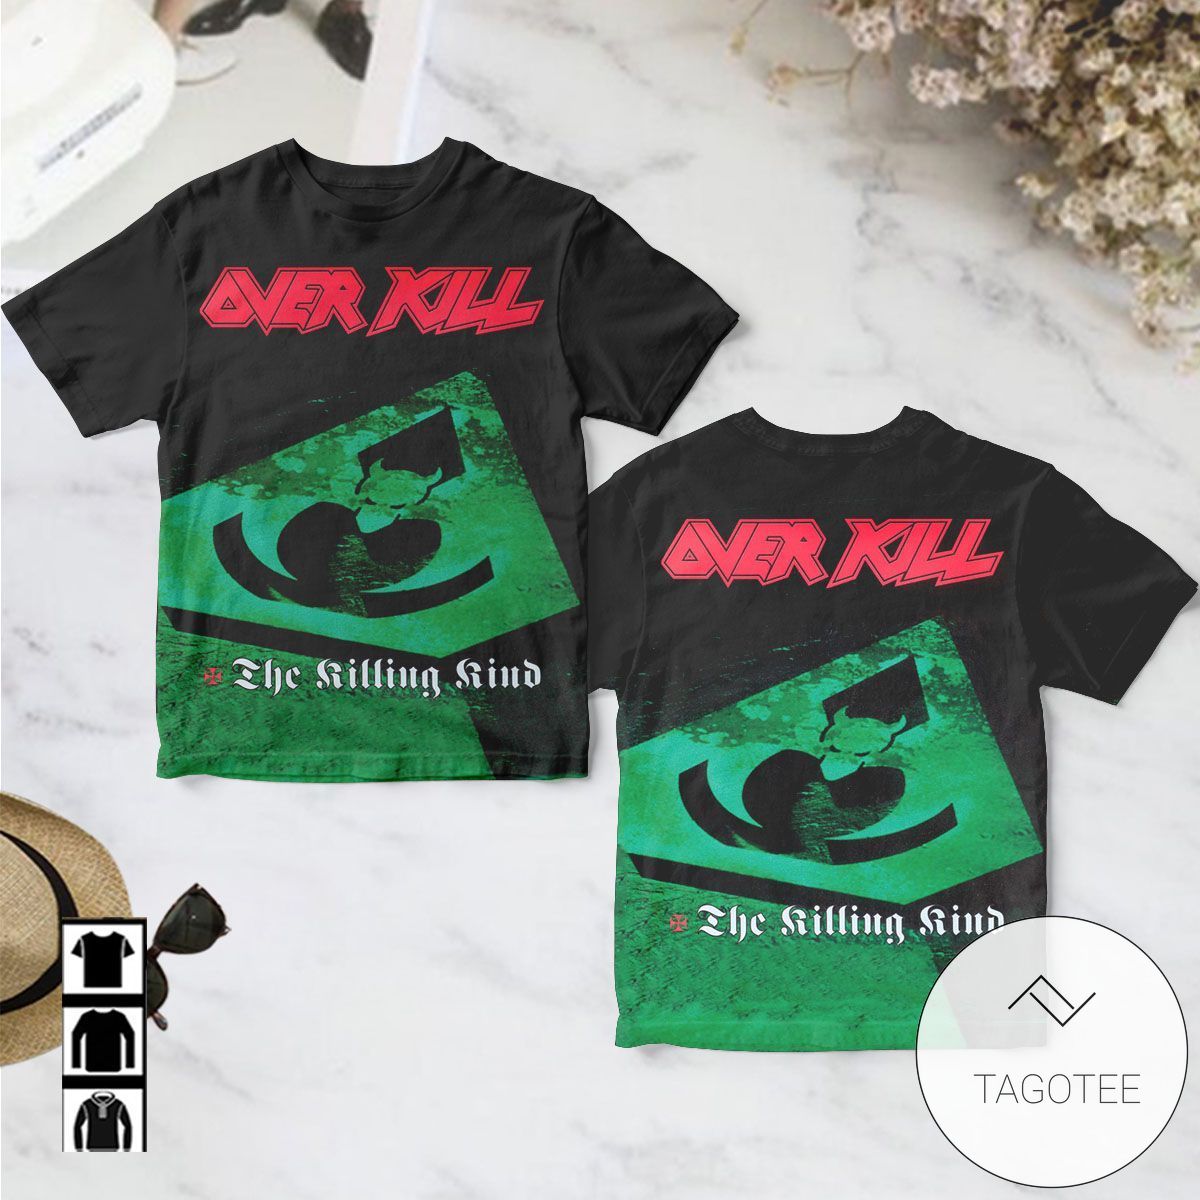 Overkill The Killing Kind Album Cover Shirt